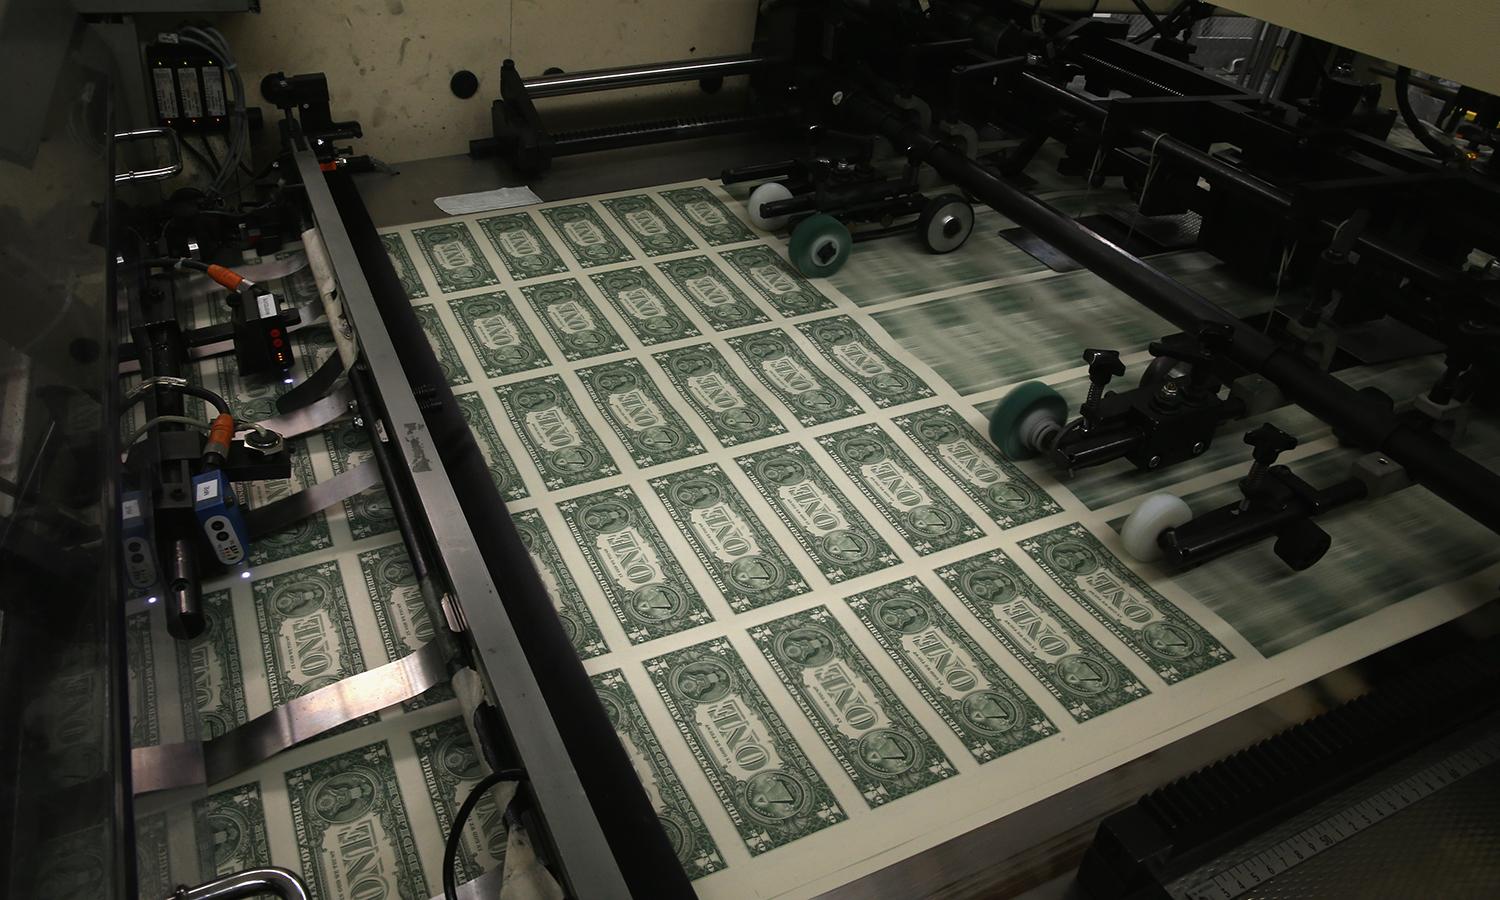 Sheets of one dollar bills run through the printing press.